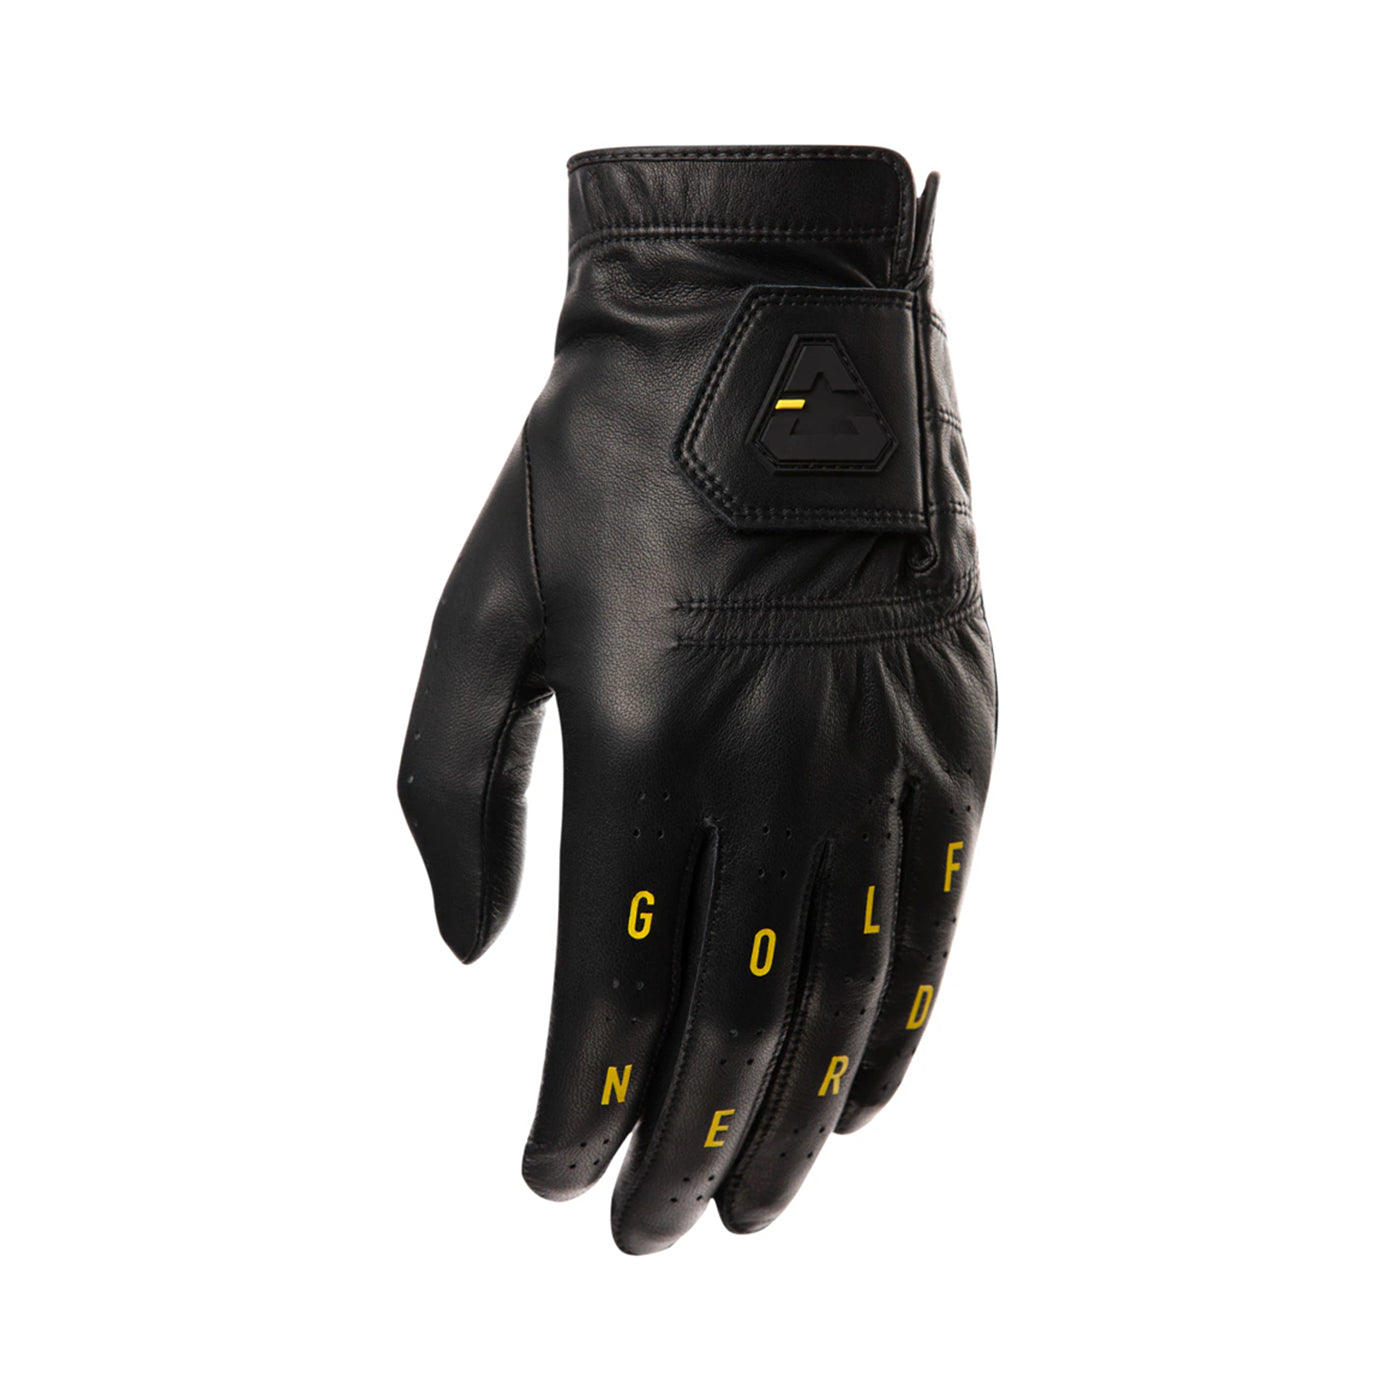 cuater-golf-nerd-fingers-glove-mlh-4mt073-black